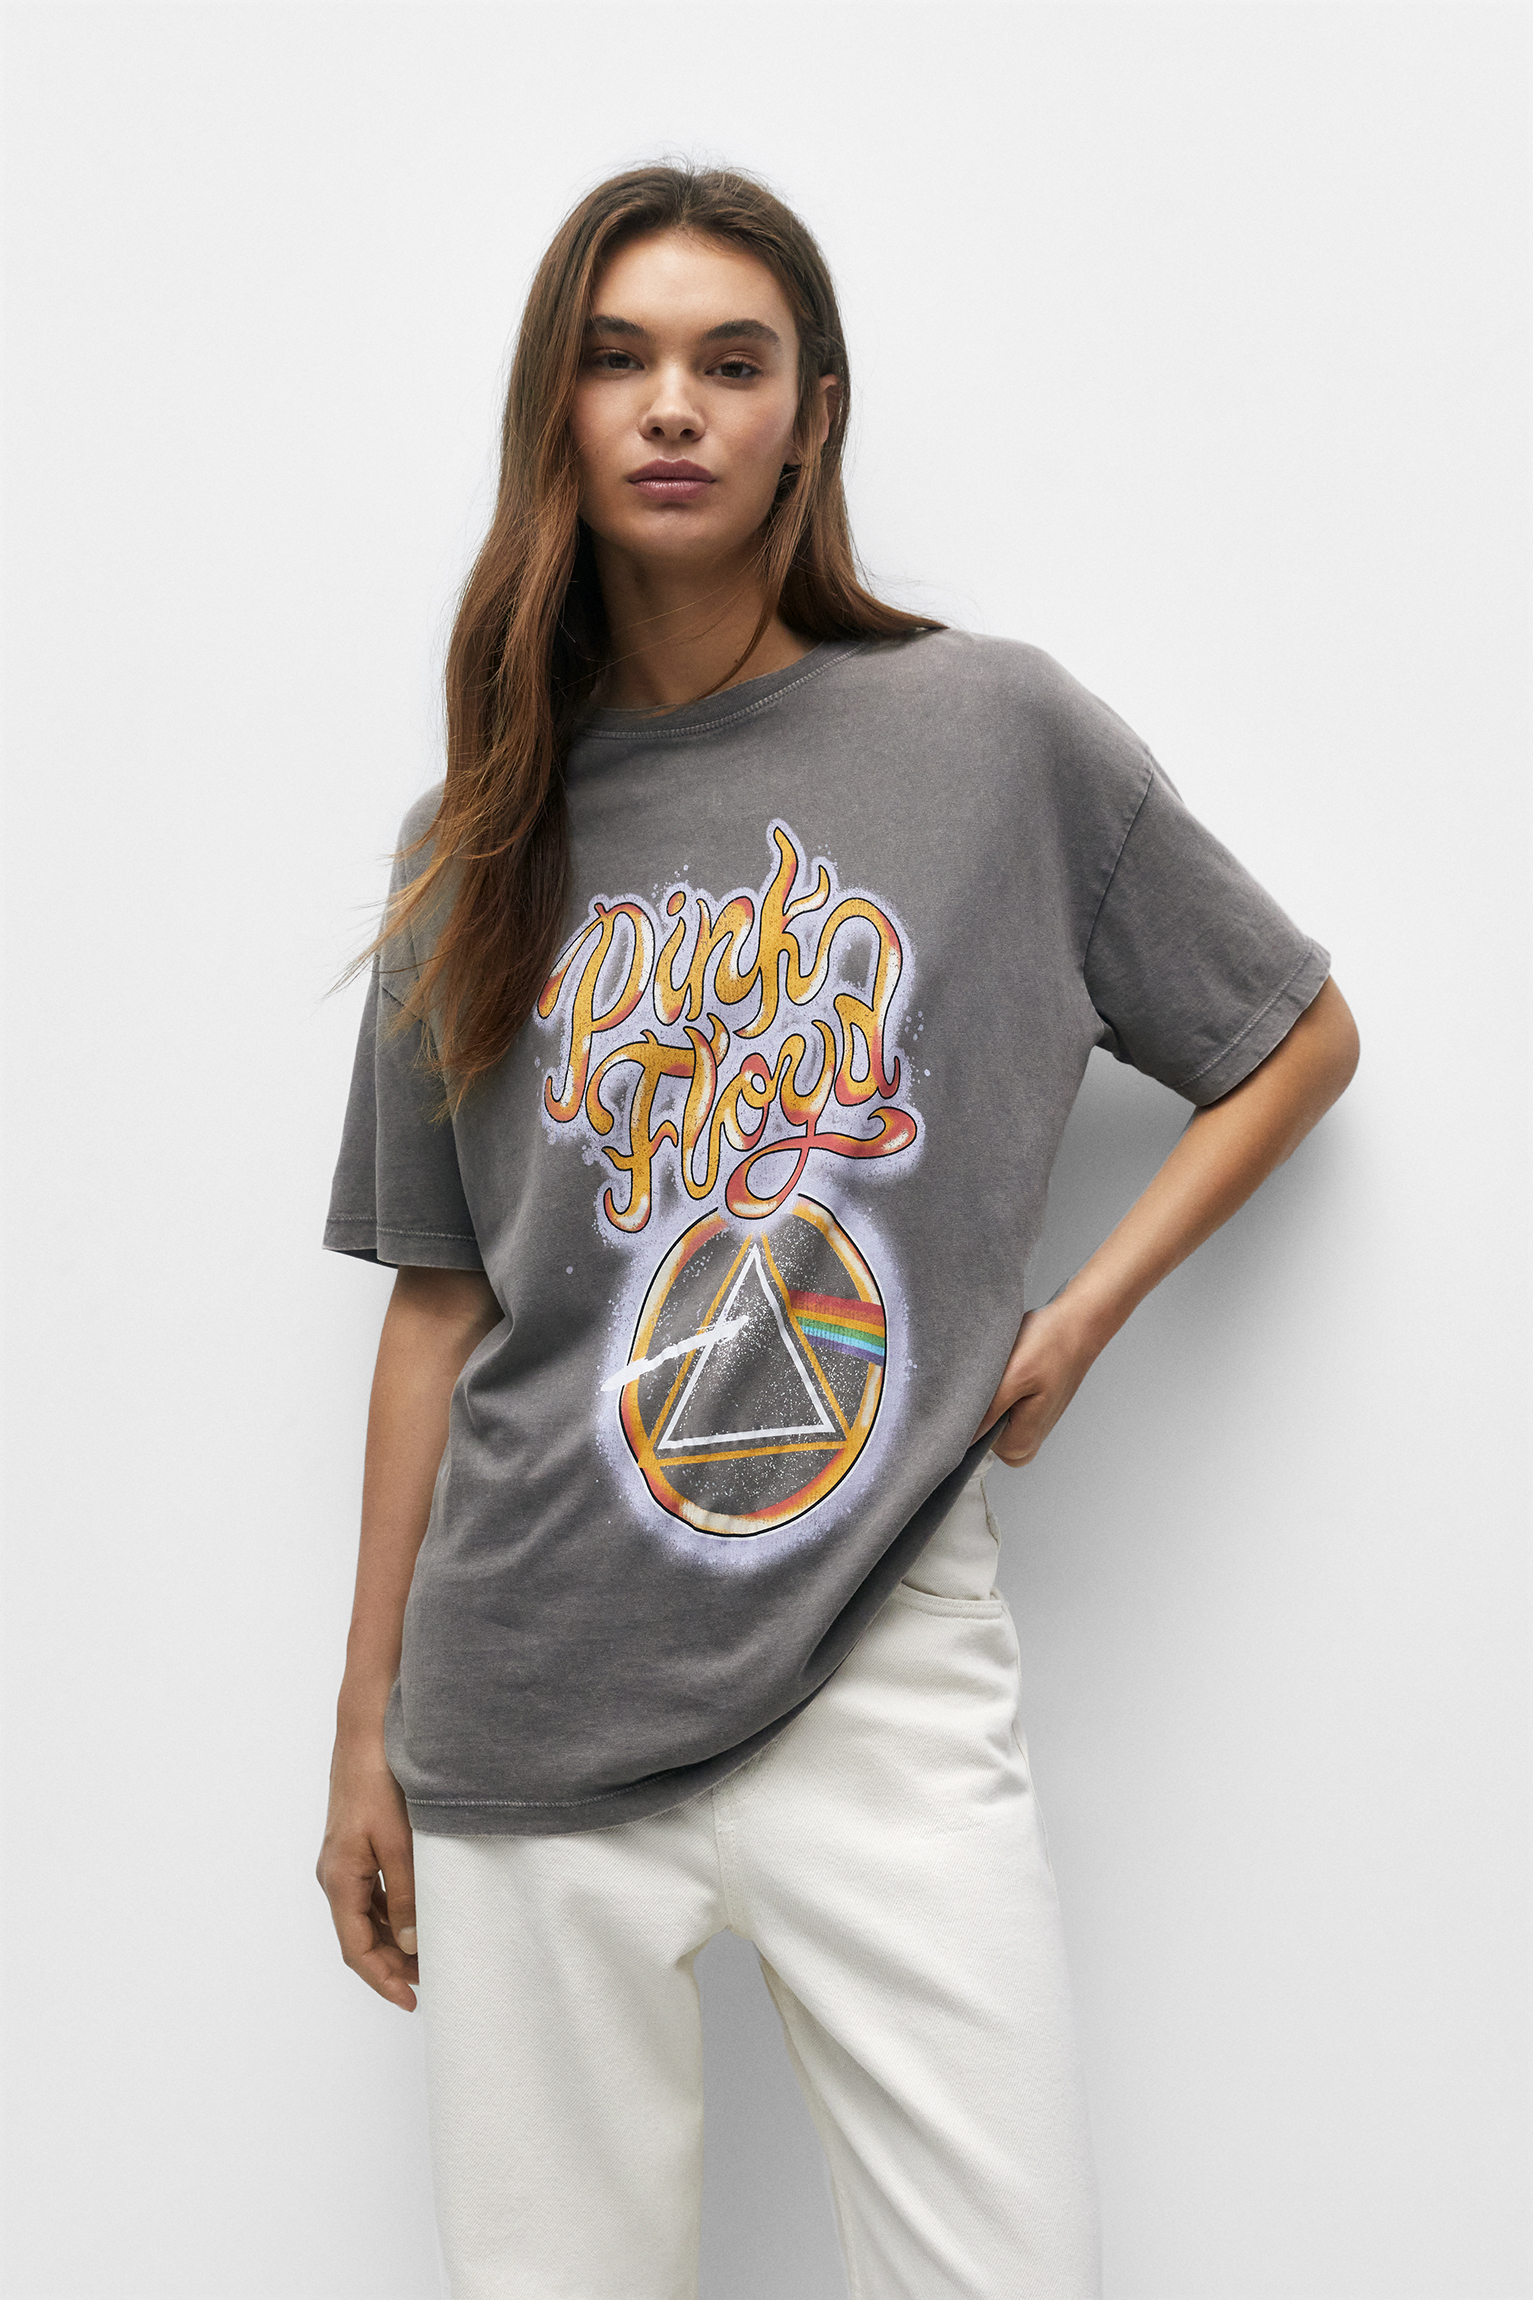 Pink Floyd T-shirt - pull&bear